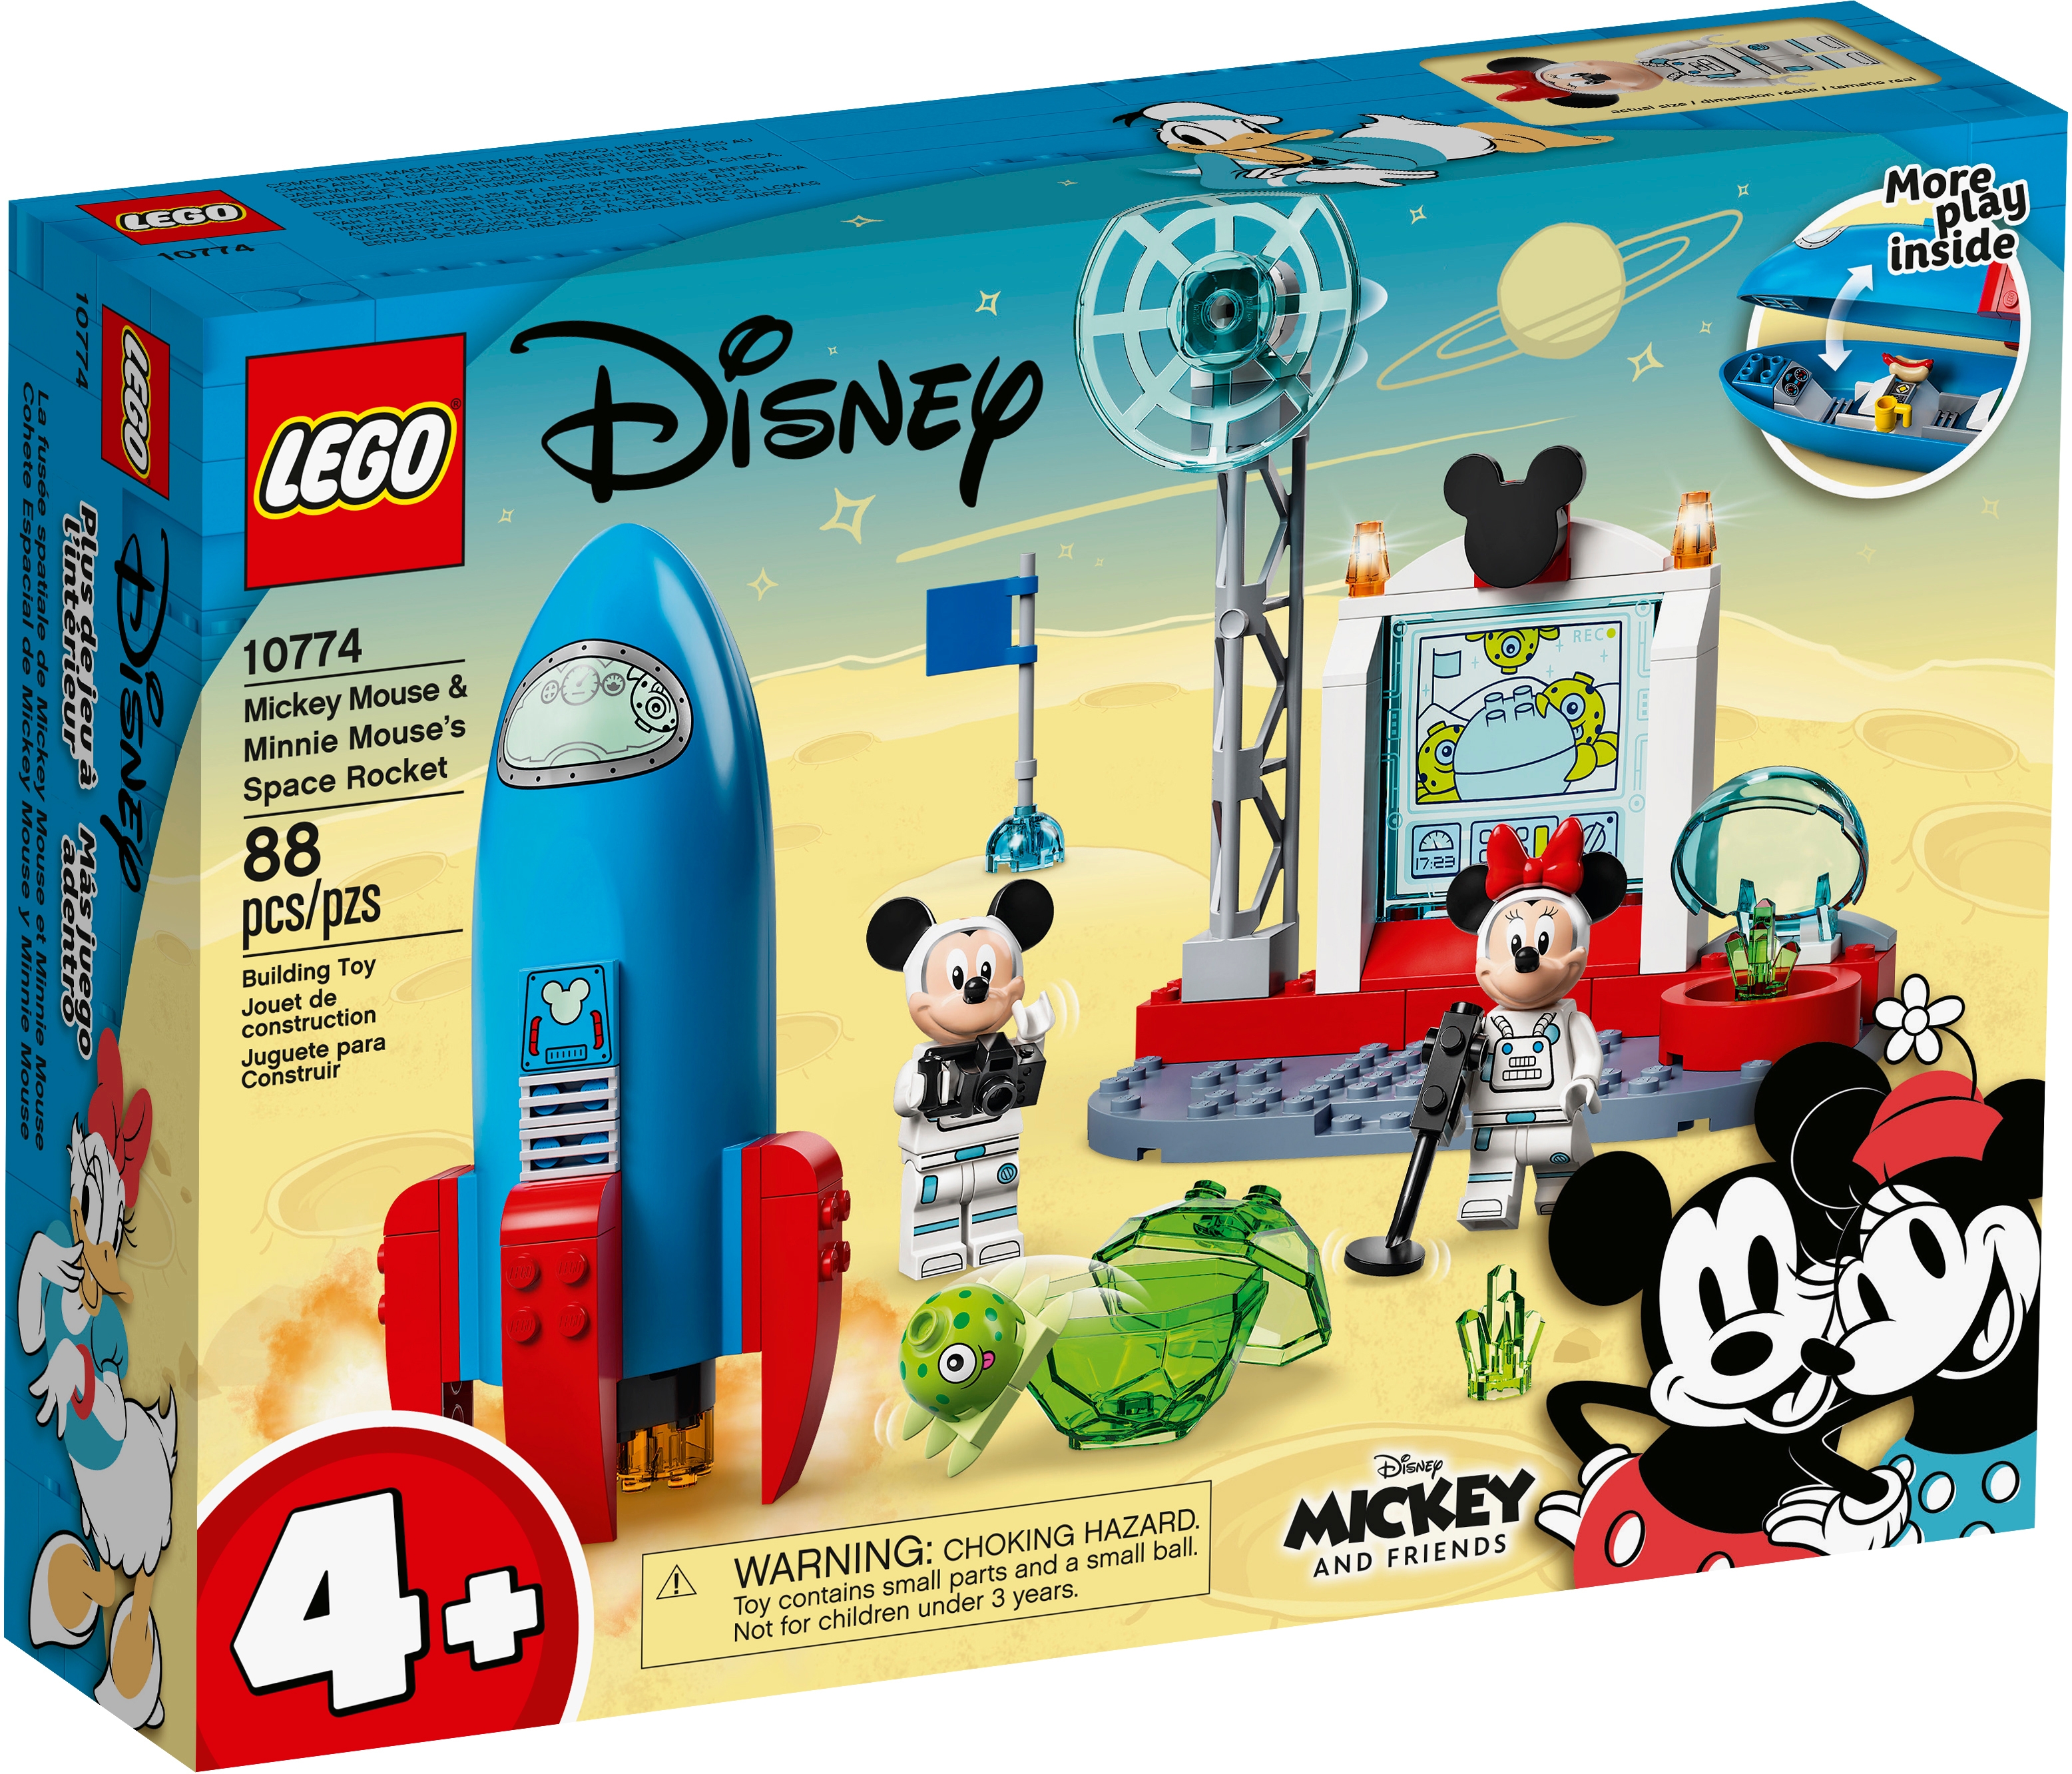 Lego ® Disney Mickey Mouse personaje minifigura mickey mouse astronauta 10774 dis047 